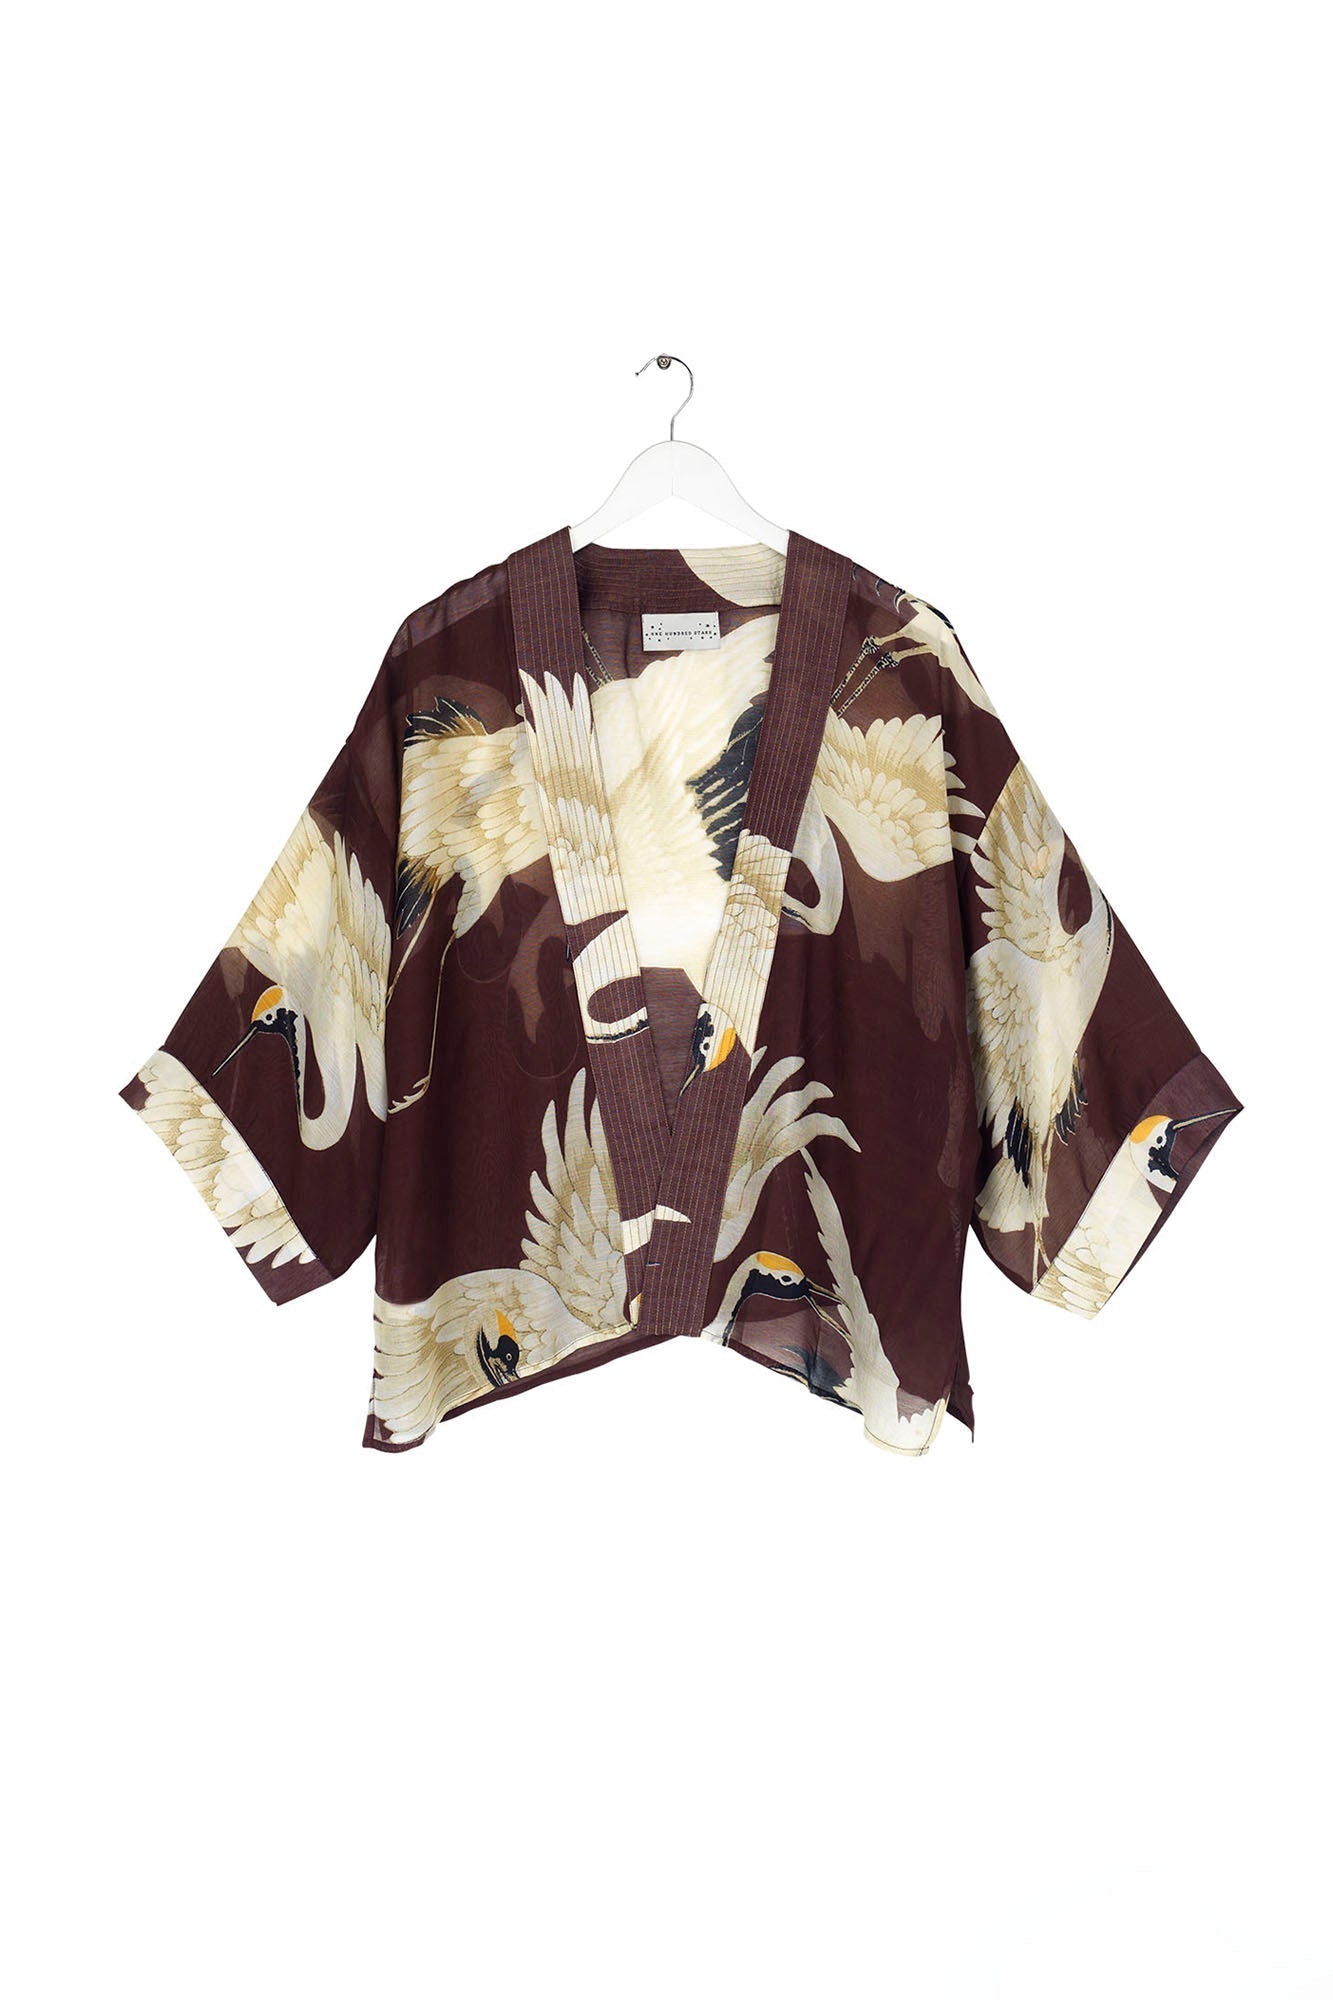 Burgundy Stork Kimono - The Nancy Smillie Shop - Art, Jewellery & Designer Gifts Glasgow